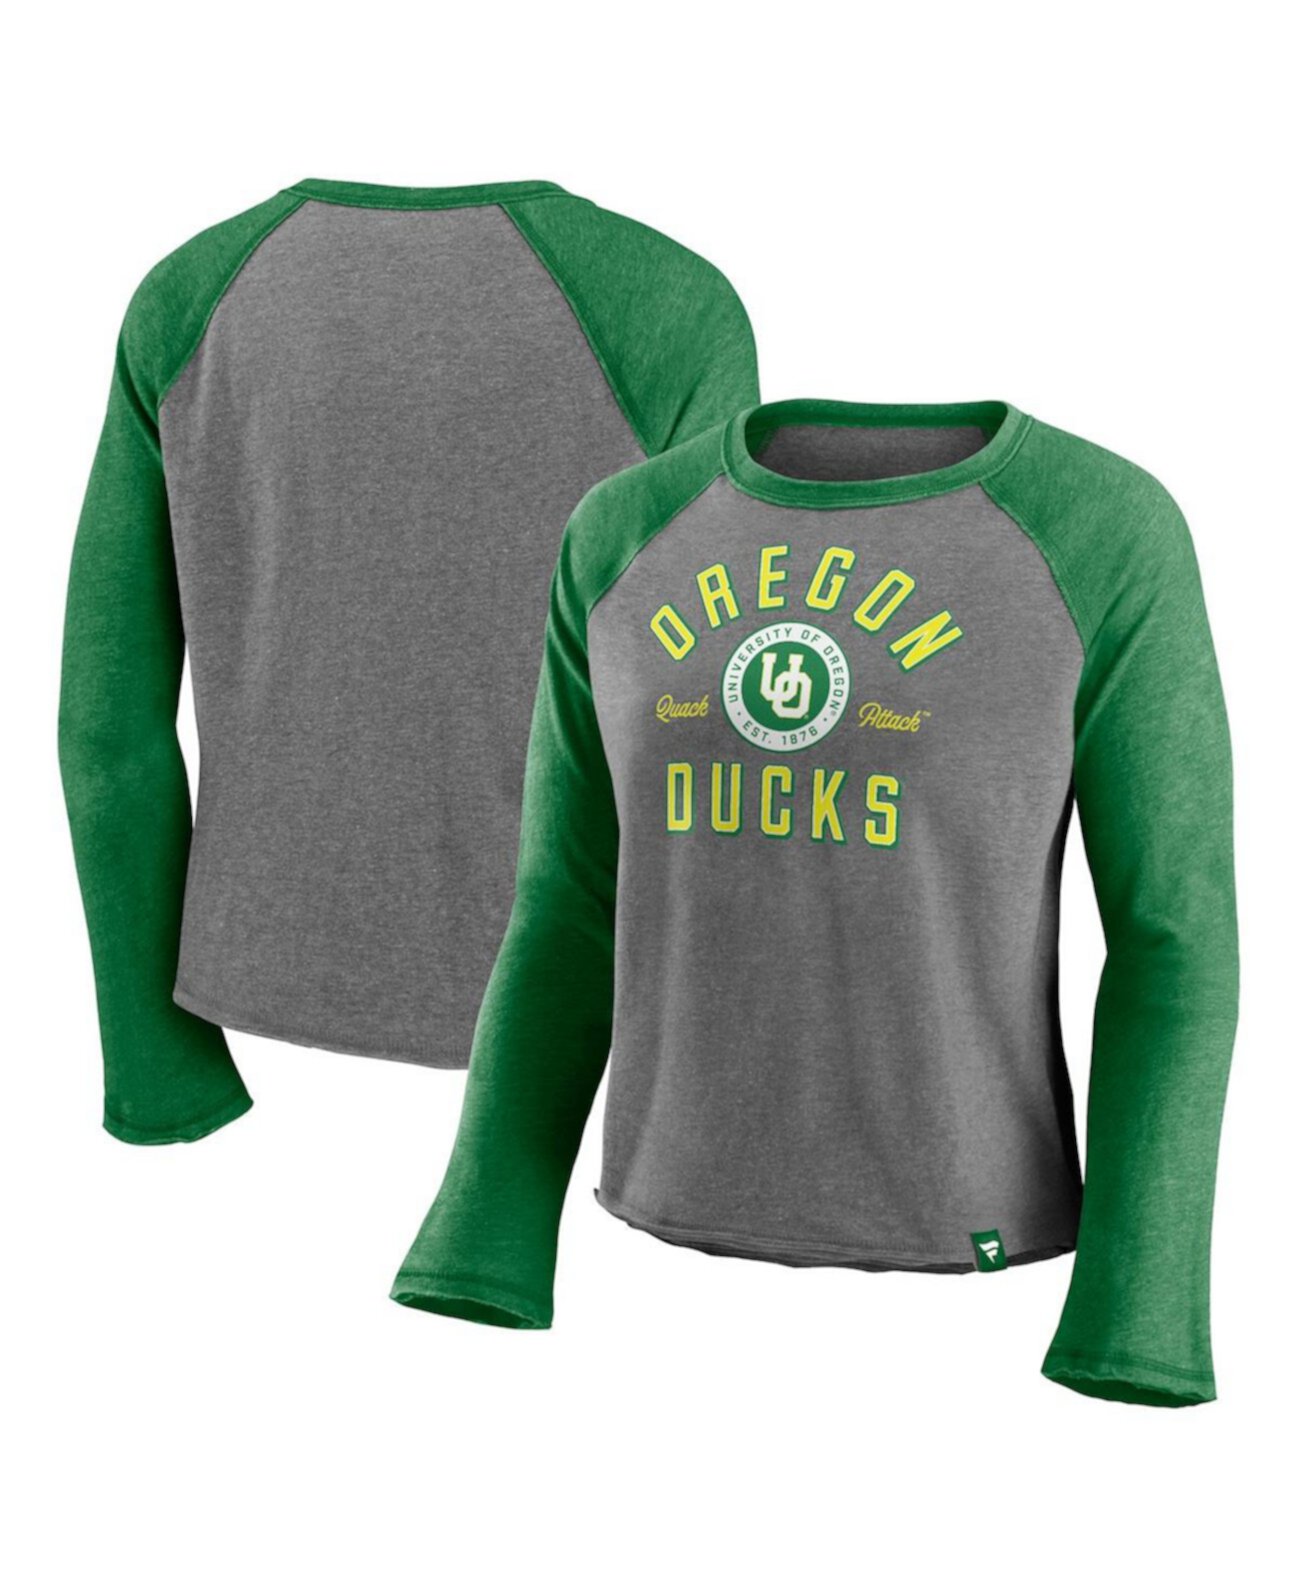 Women's Majestic Heathered Gray, Heathered Green Oregon Ducks Competitive Edge Cropped Raglan Long Sleeve T-shirt Fanatics